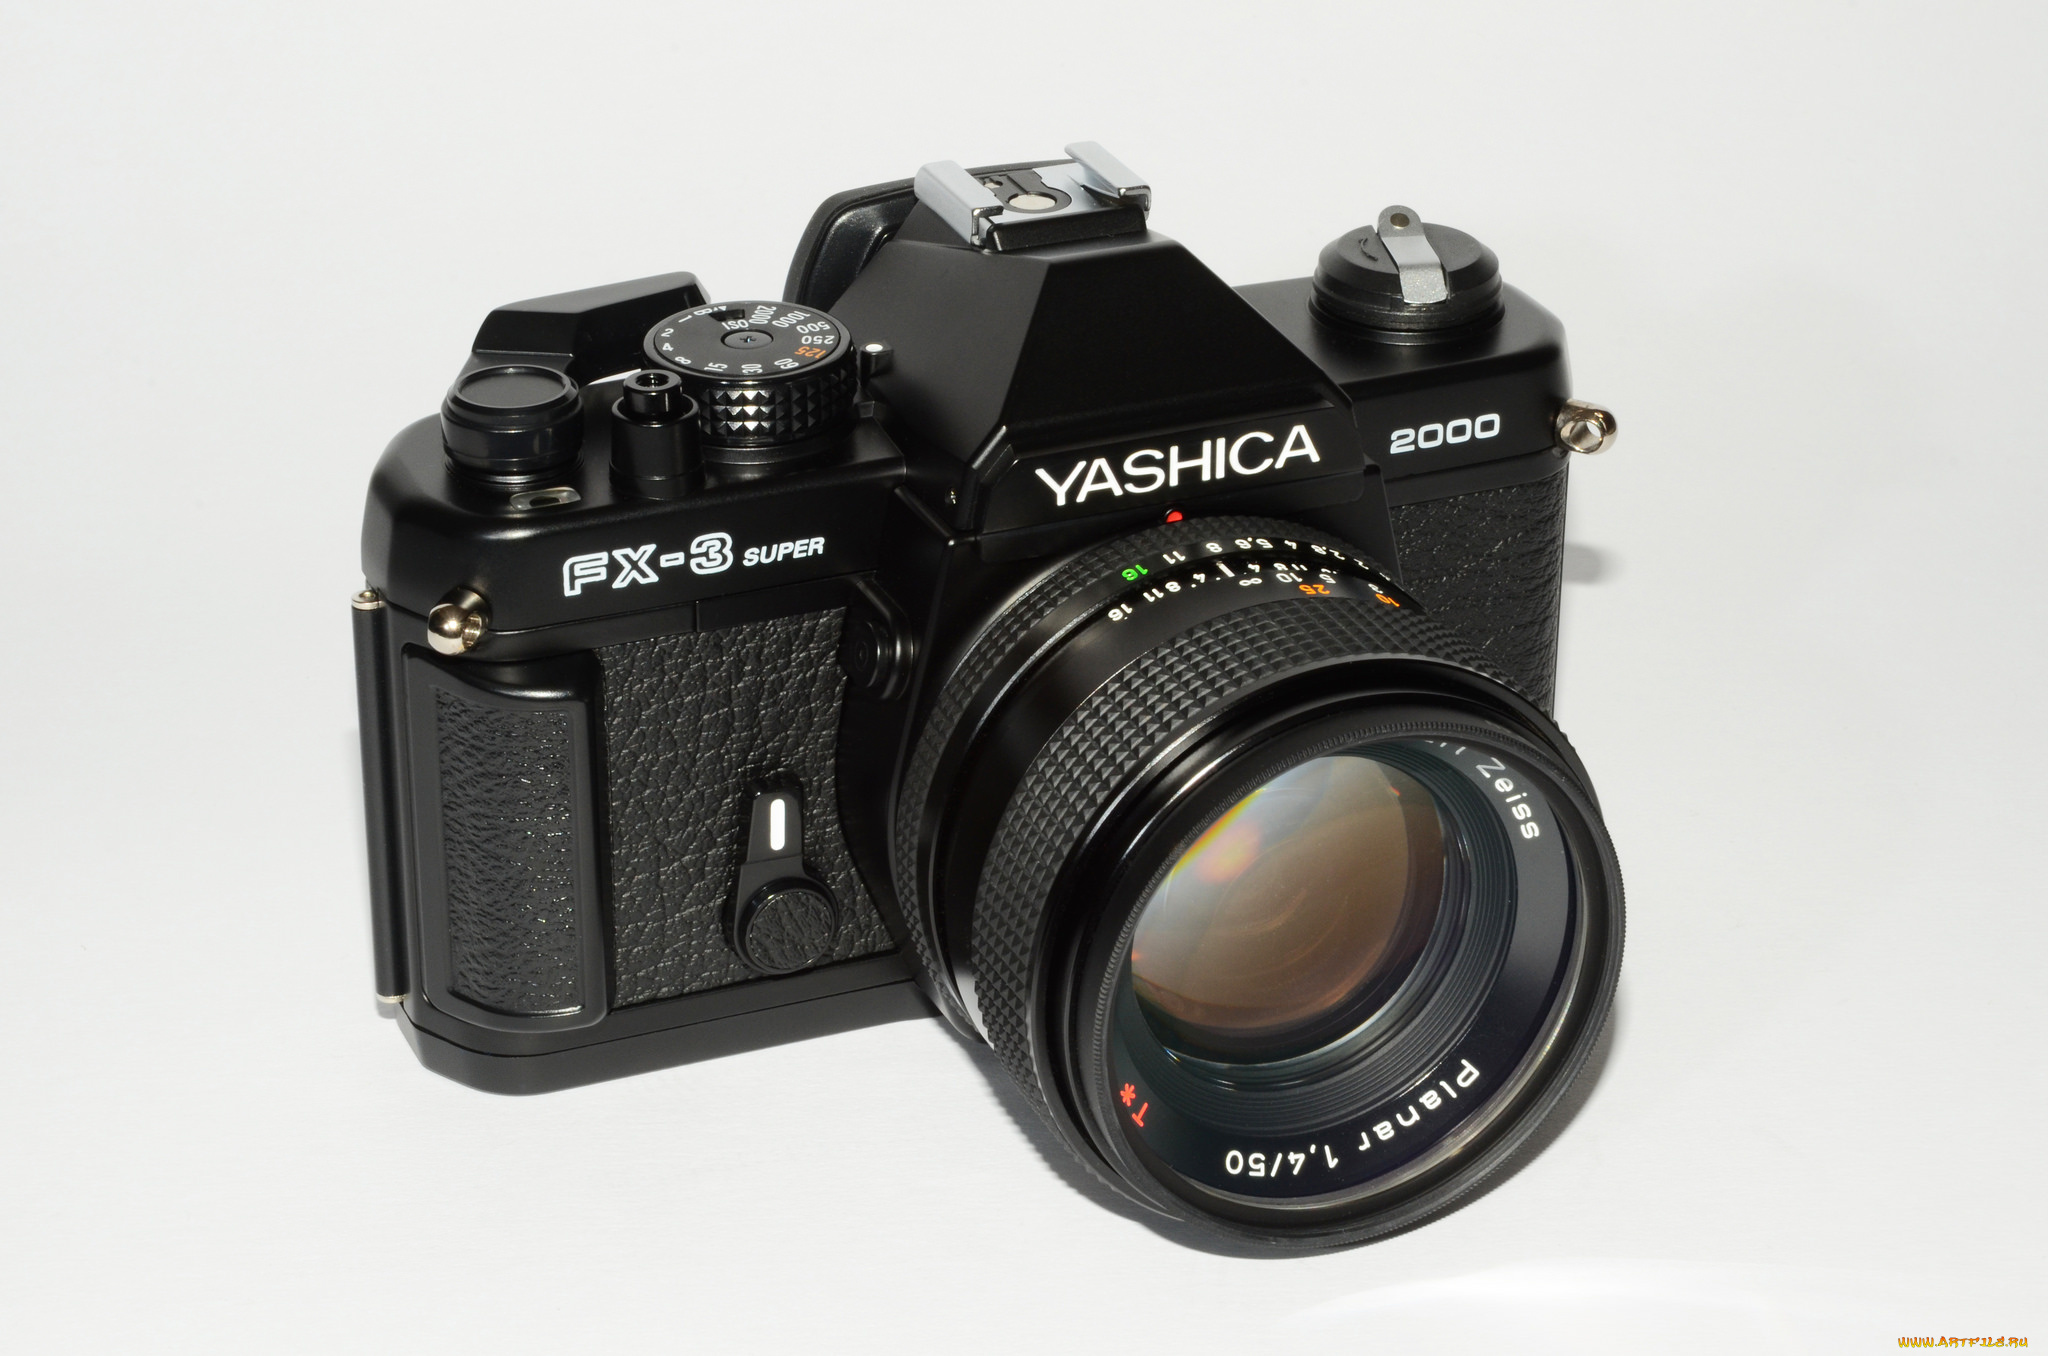 yashica, fx-3, super, 2000, бренды, -, другое, фотокамера